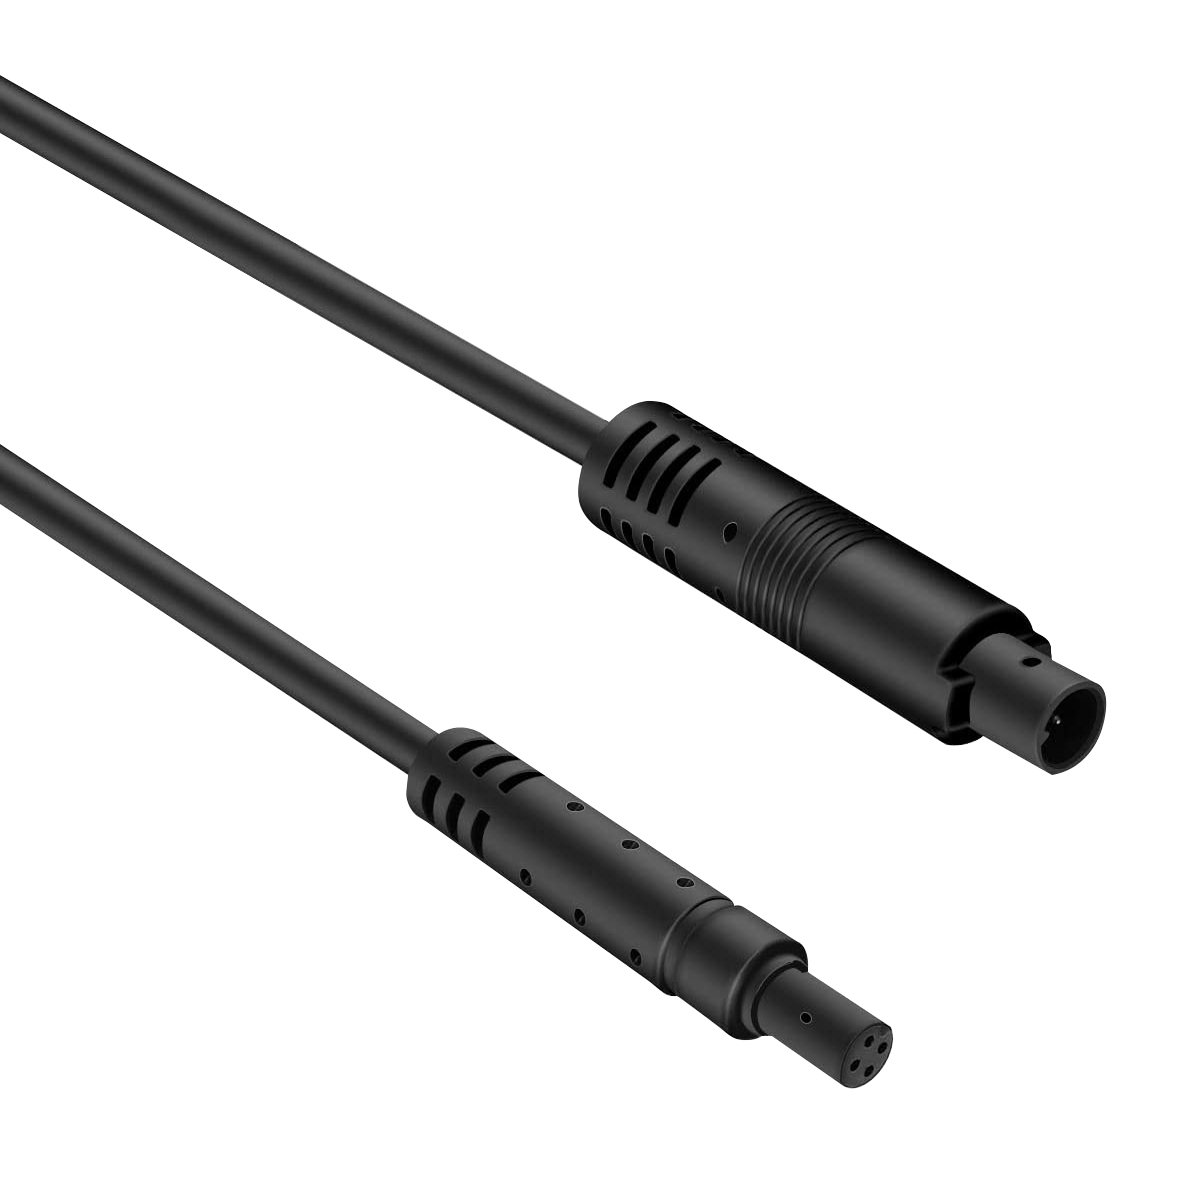 ApaxQ [CBL55] Car camera extension cable 4 pin 5.5M